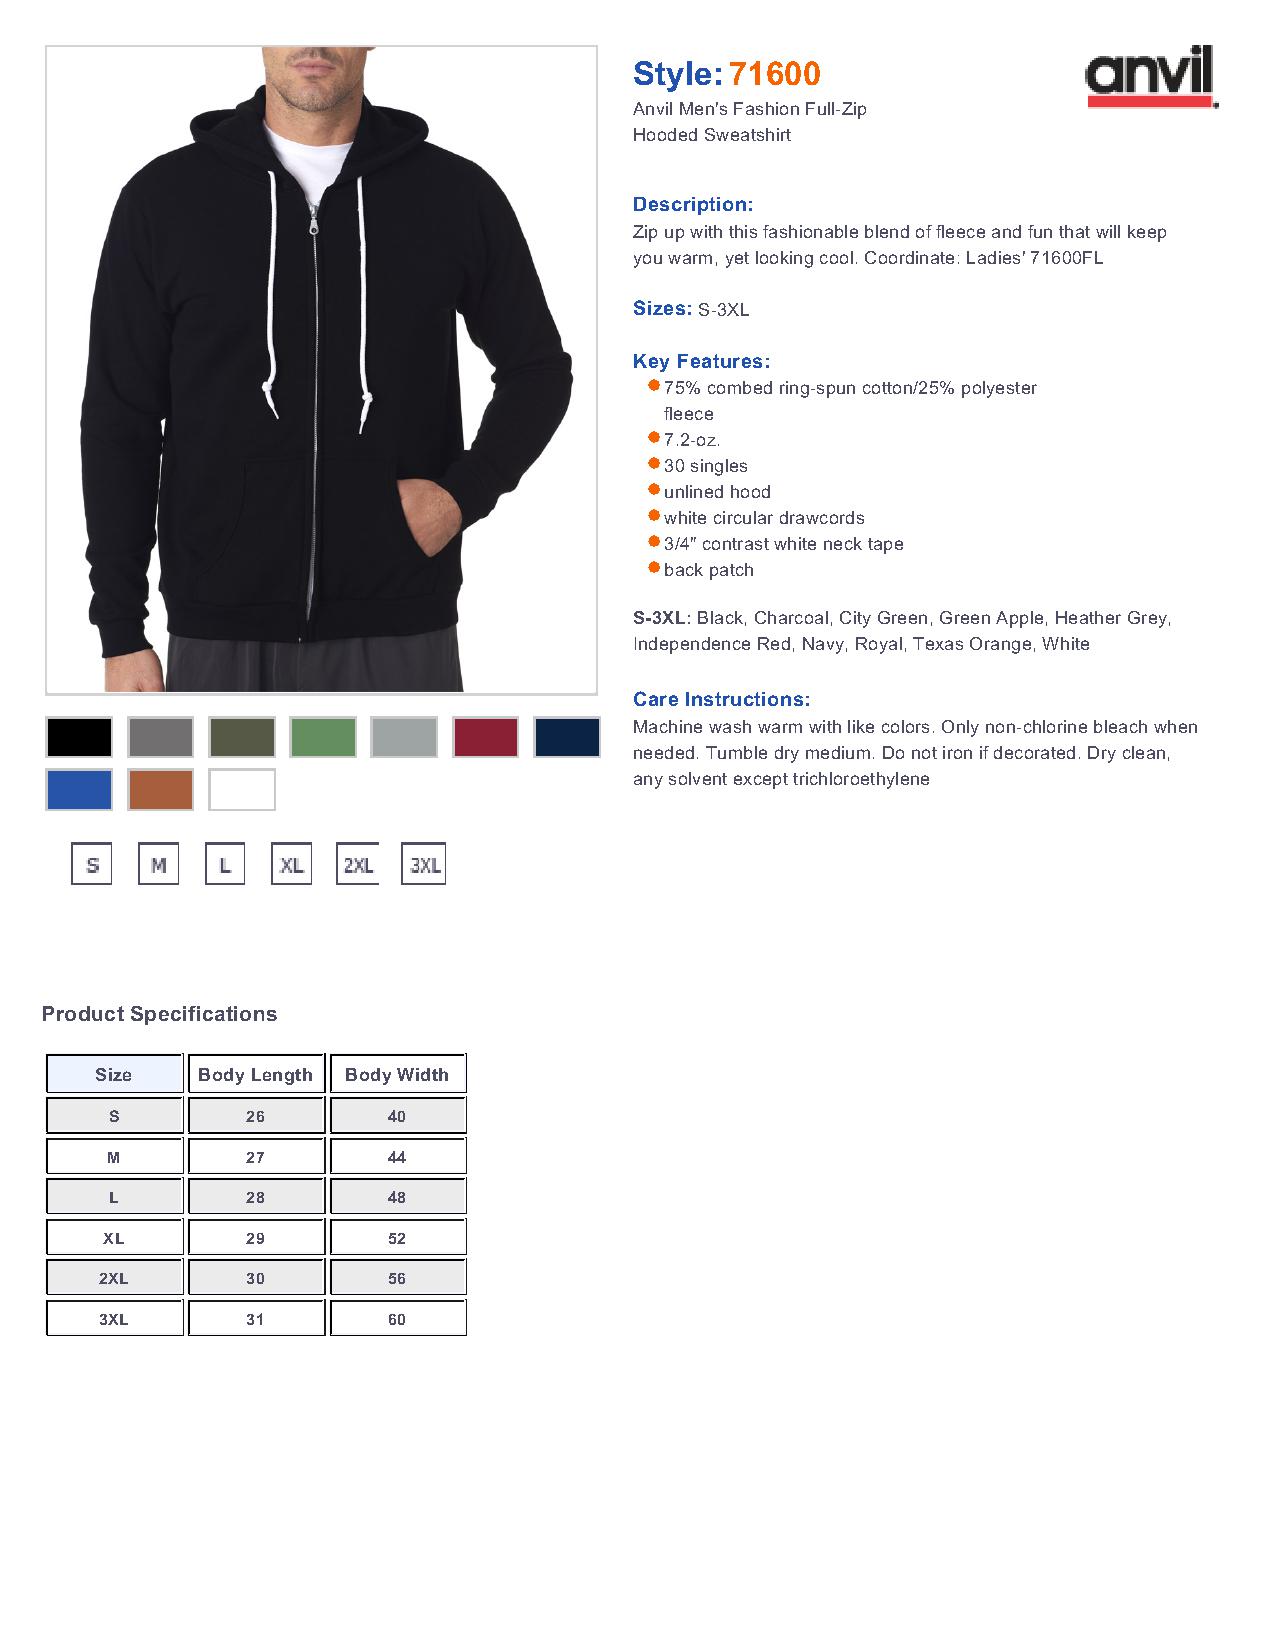 Anvil 71600 - Men's Fashion Full-Zip Hooded Sweatshirt $22.46 - Men's ...